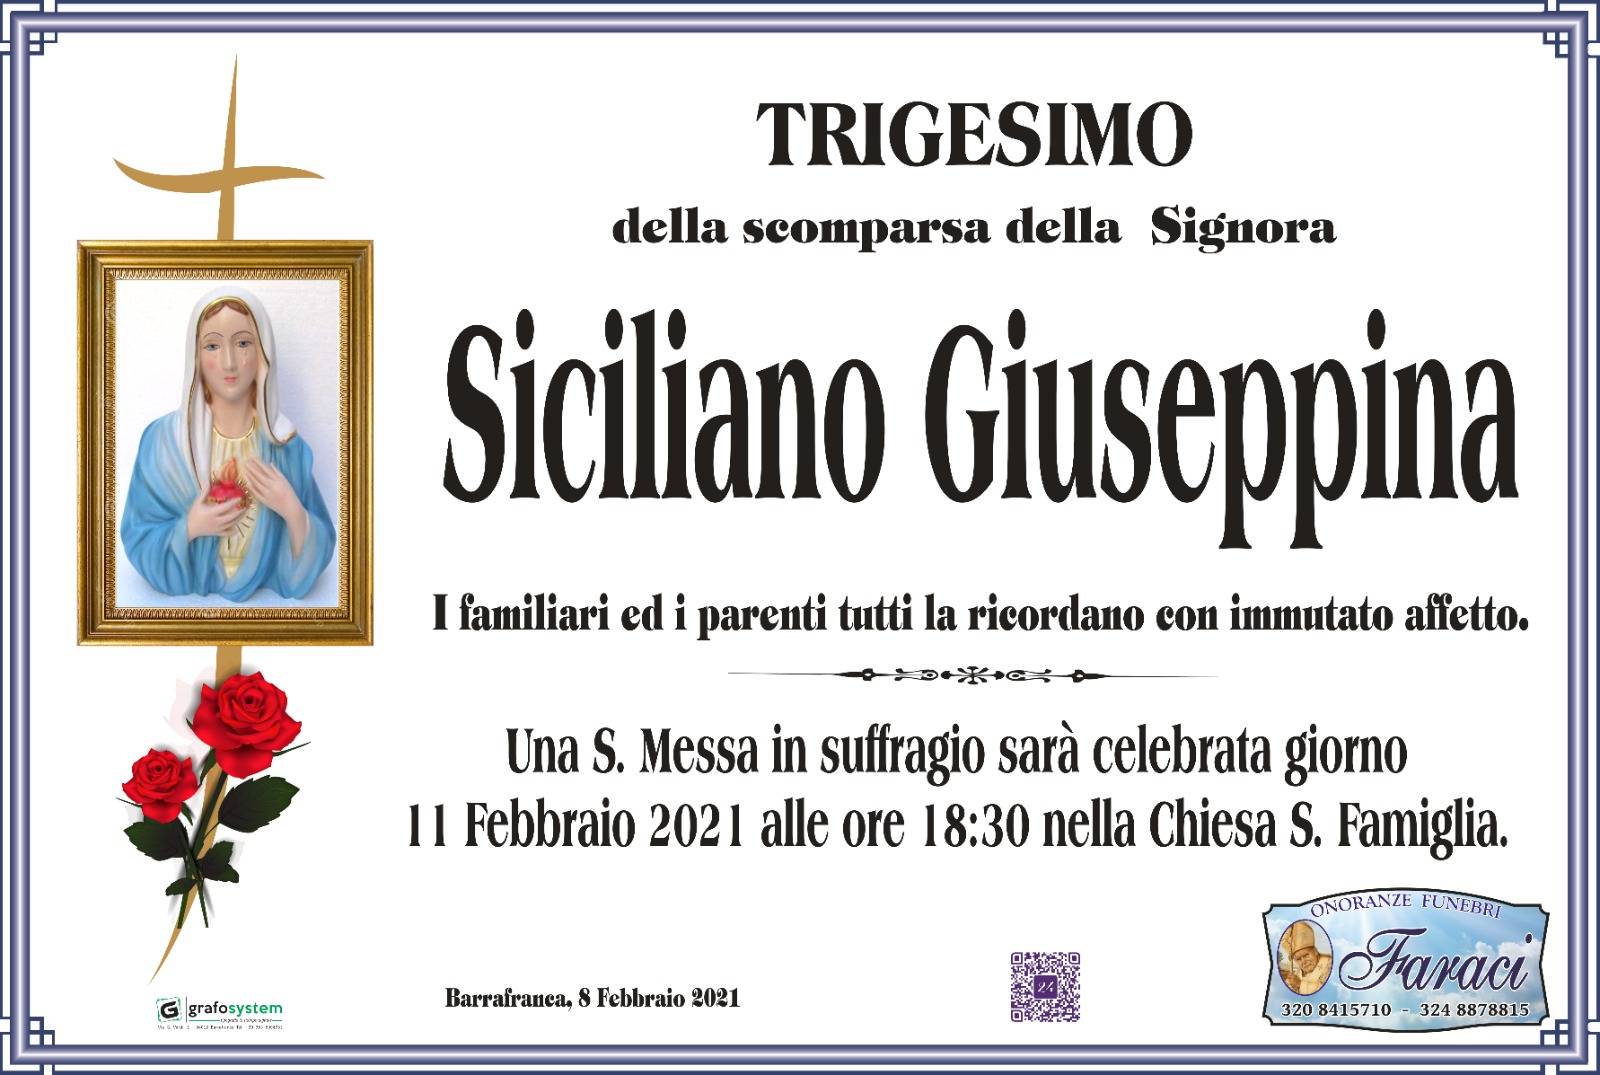 Giuseppina Siciliano